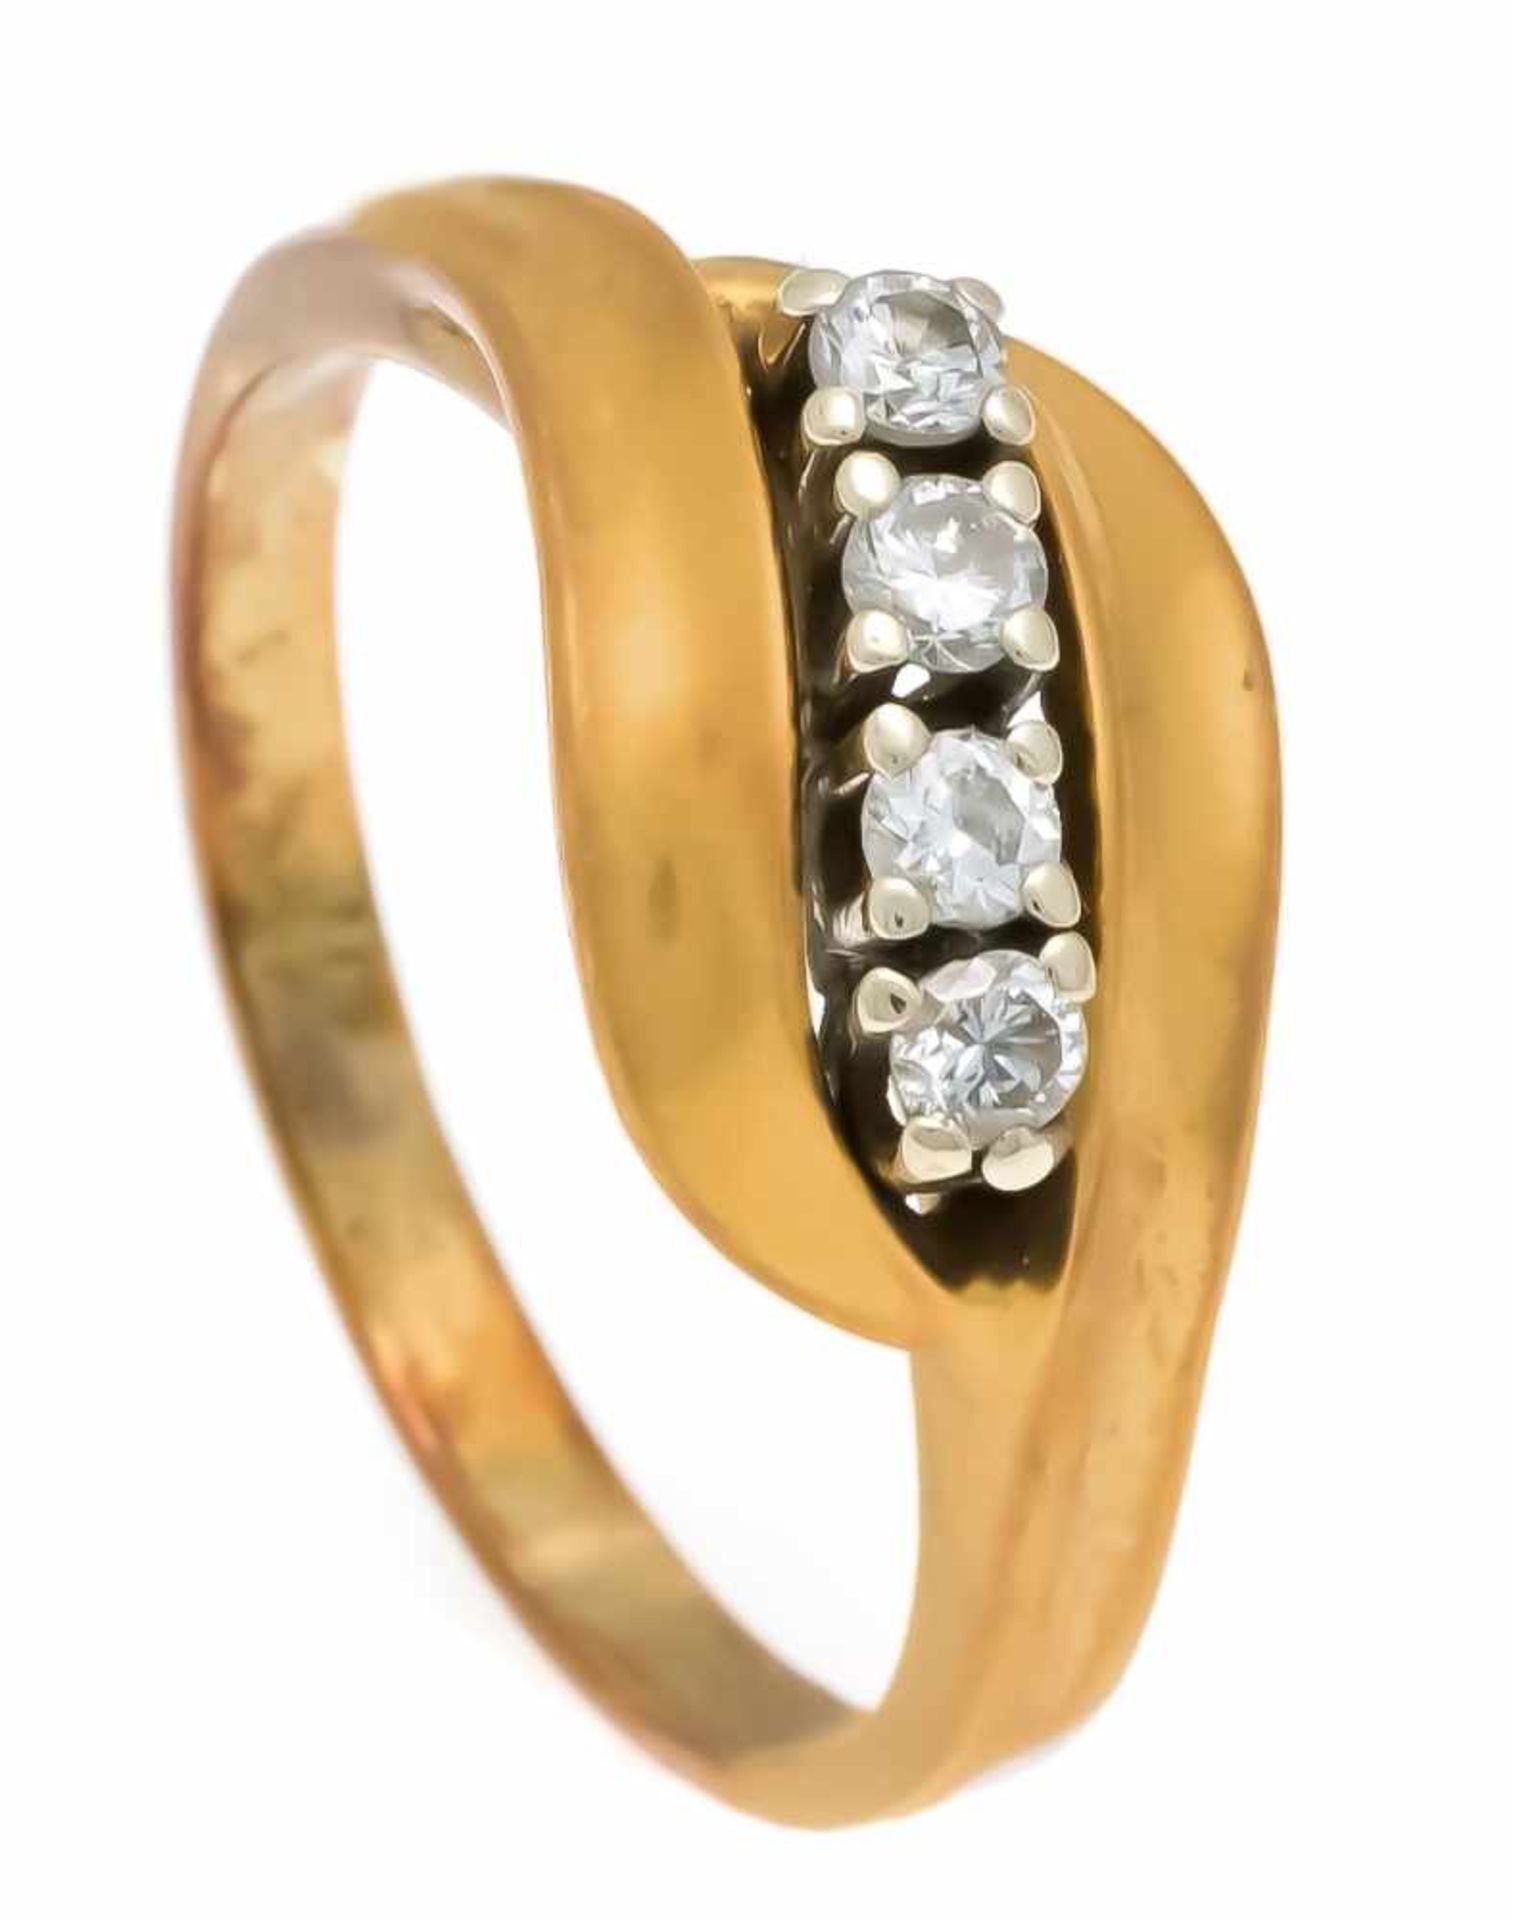 Brillant-Ring GG/WG 585/000 mit 4 Brillanten, zus. 0,16 ct W/VS-SI, RG 57, 4,1 gDiamond ring GG / WG